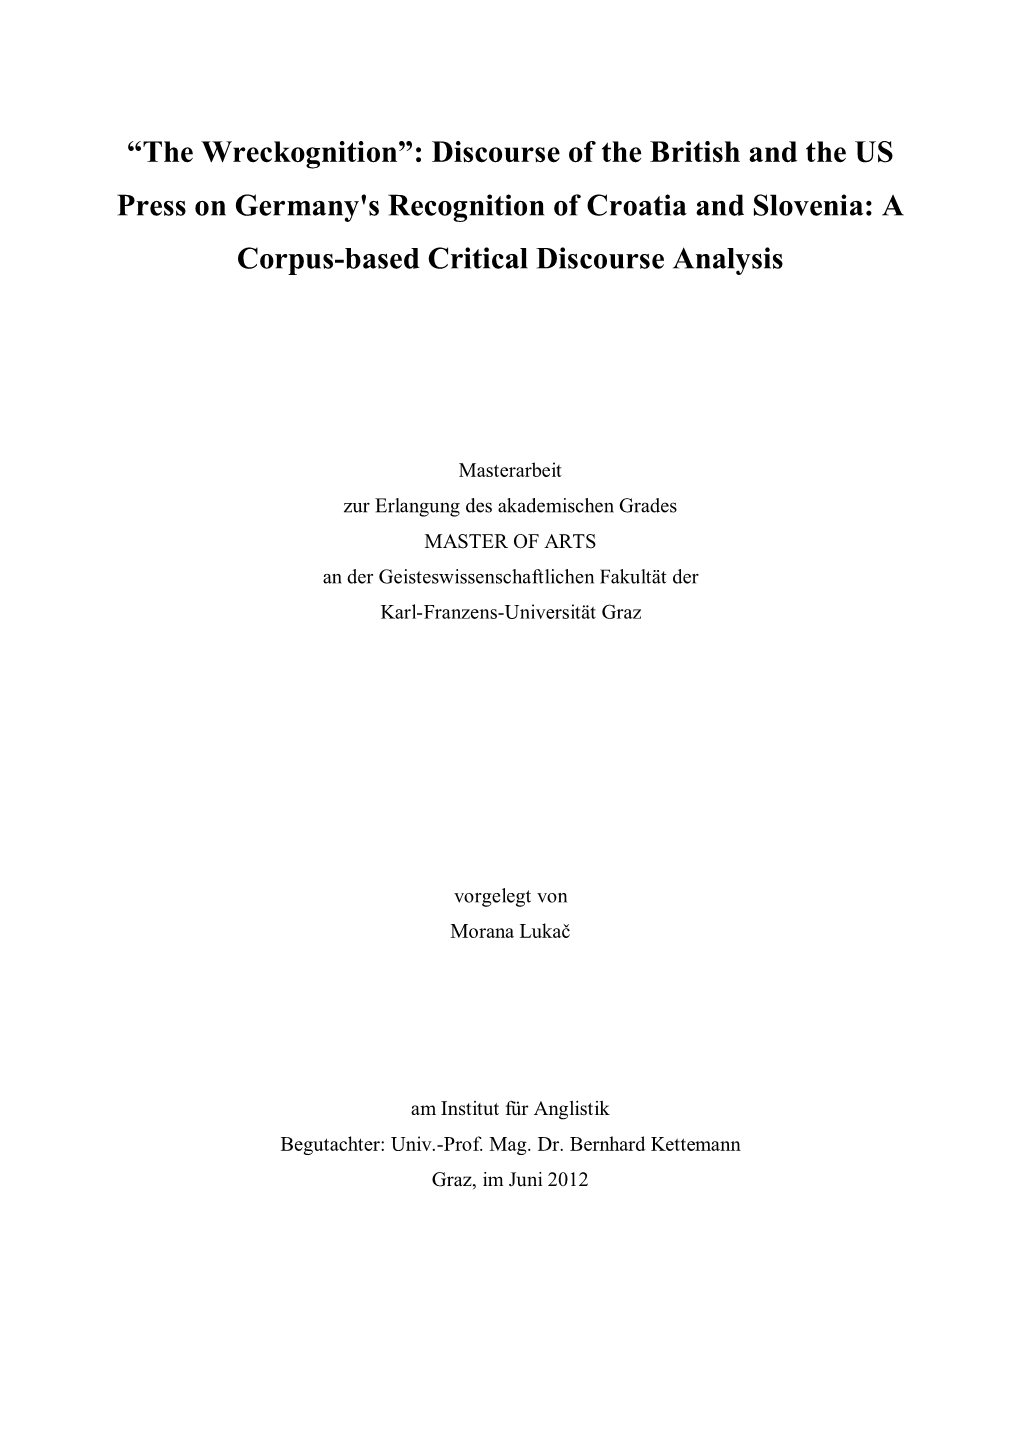 A Corpus-Based Critical Discourse Analysis